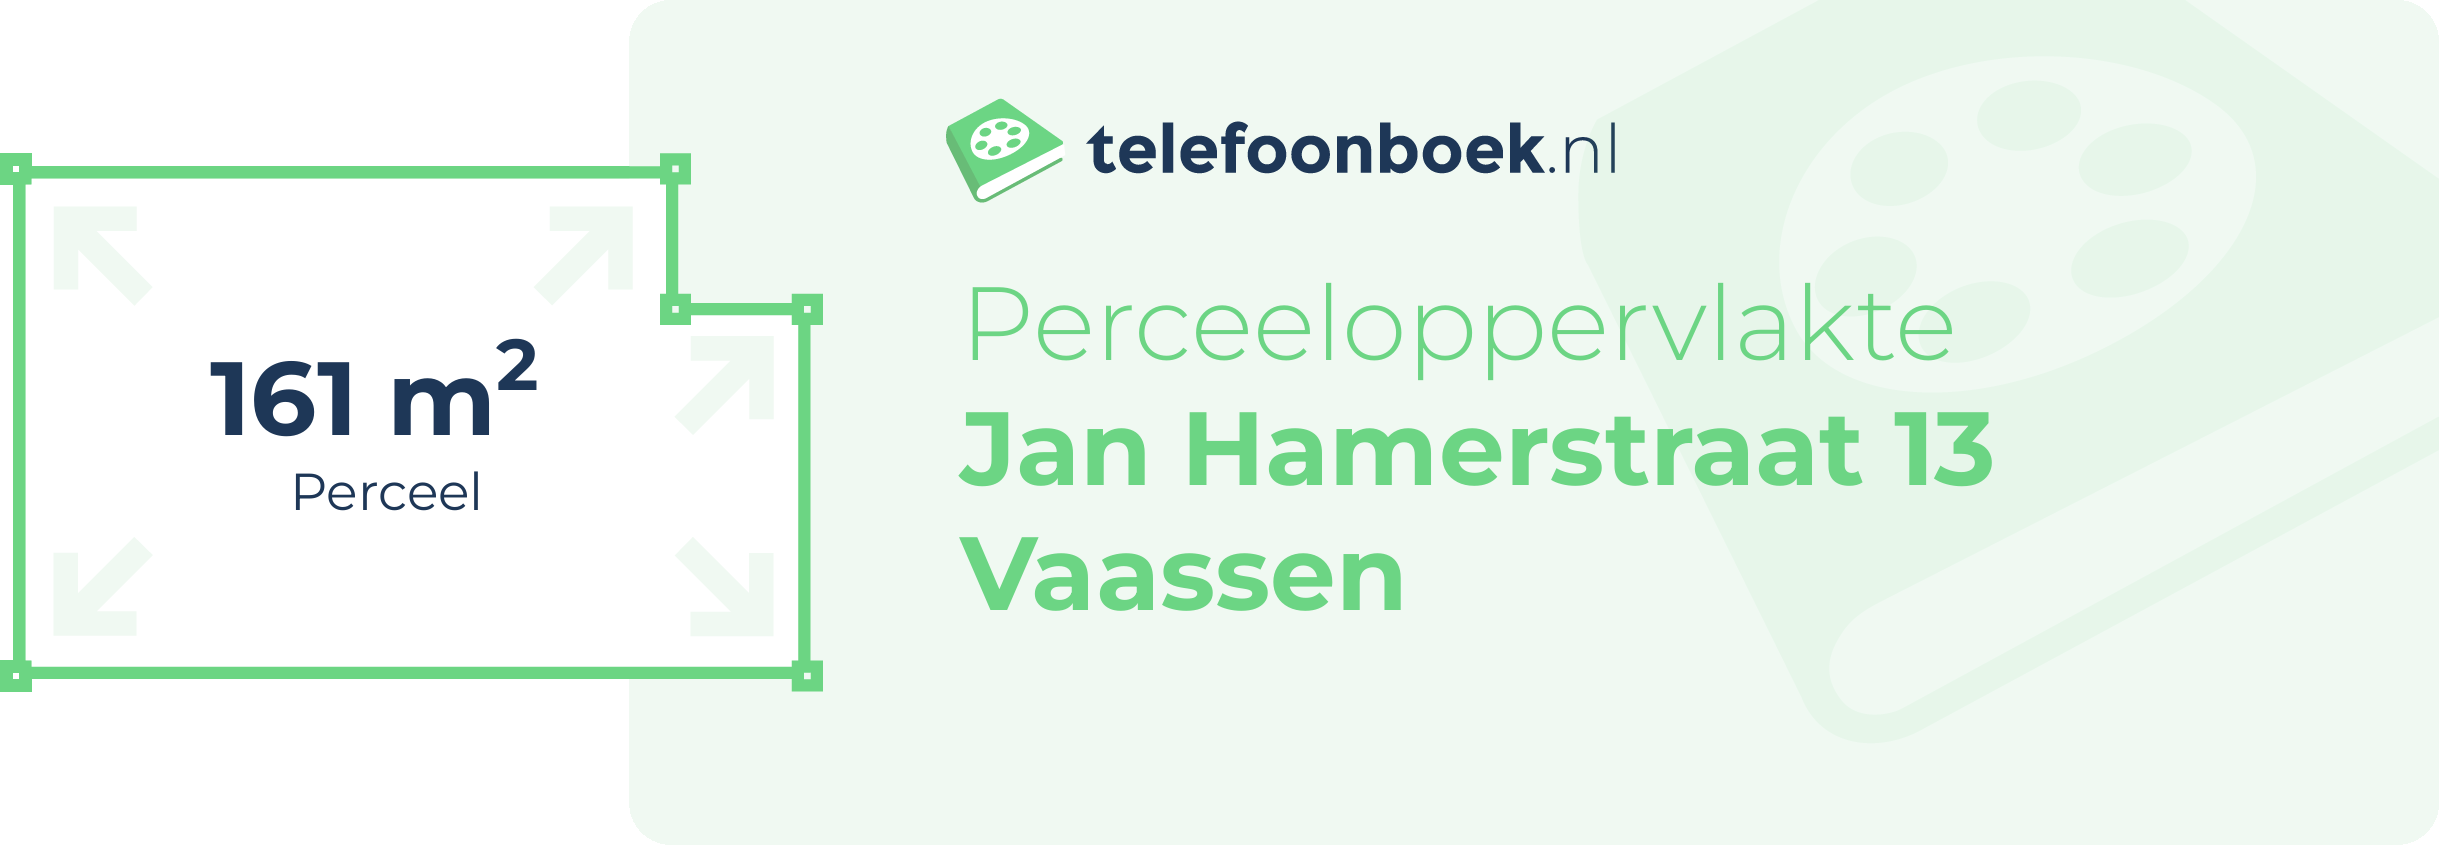 Perceeloppervlakte Jan Hamerstraat 13 Vaassen